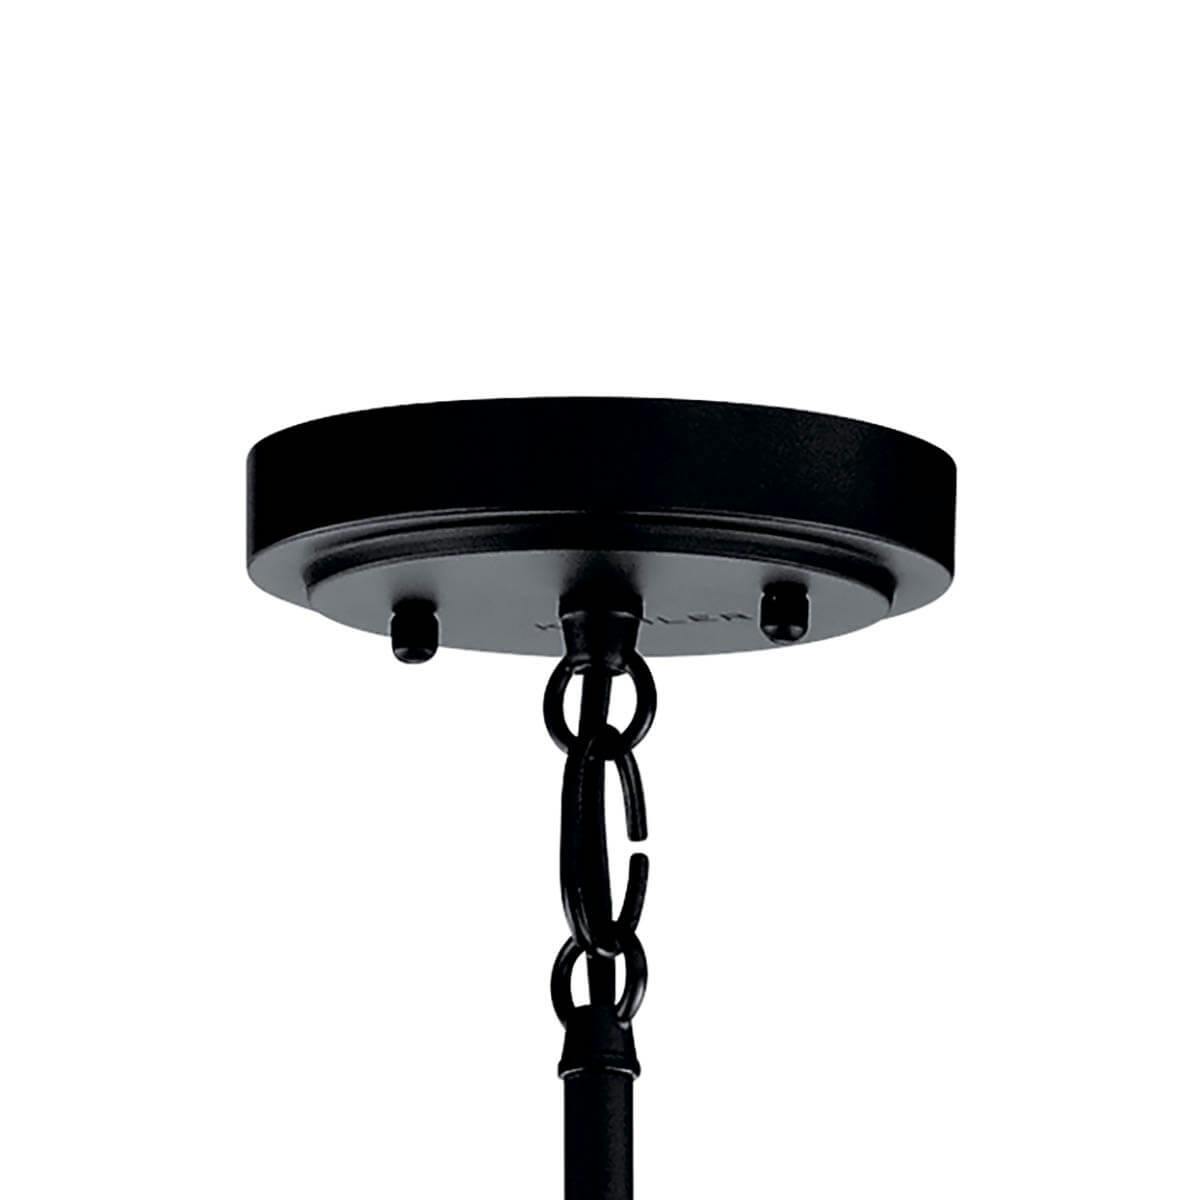 Canopy for the Samural™ 12 Light Chandelier Black on a white background